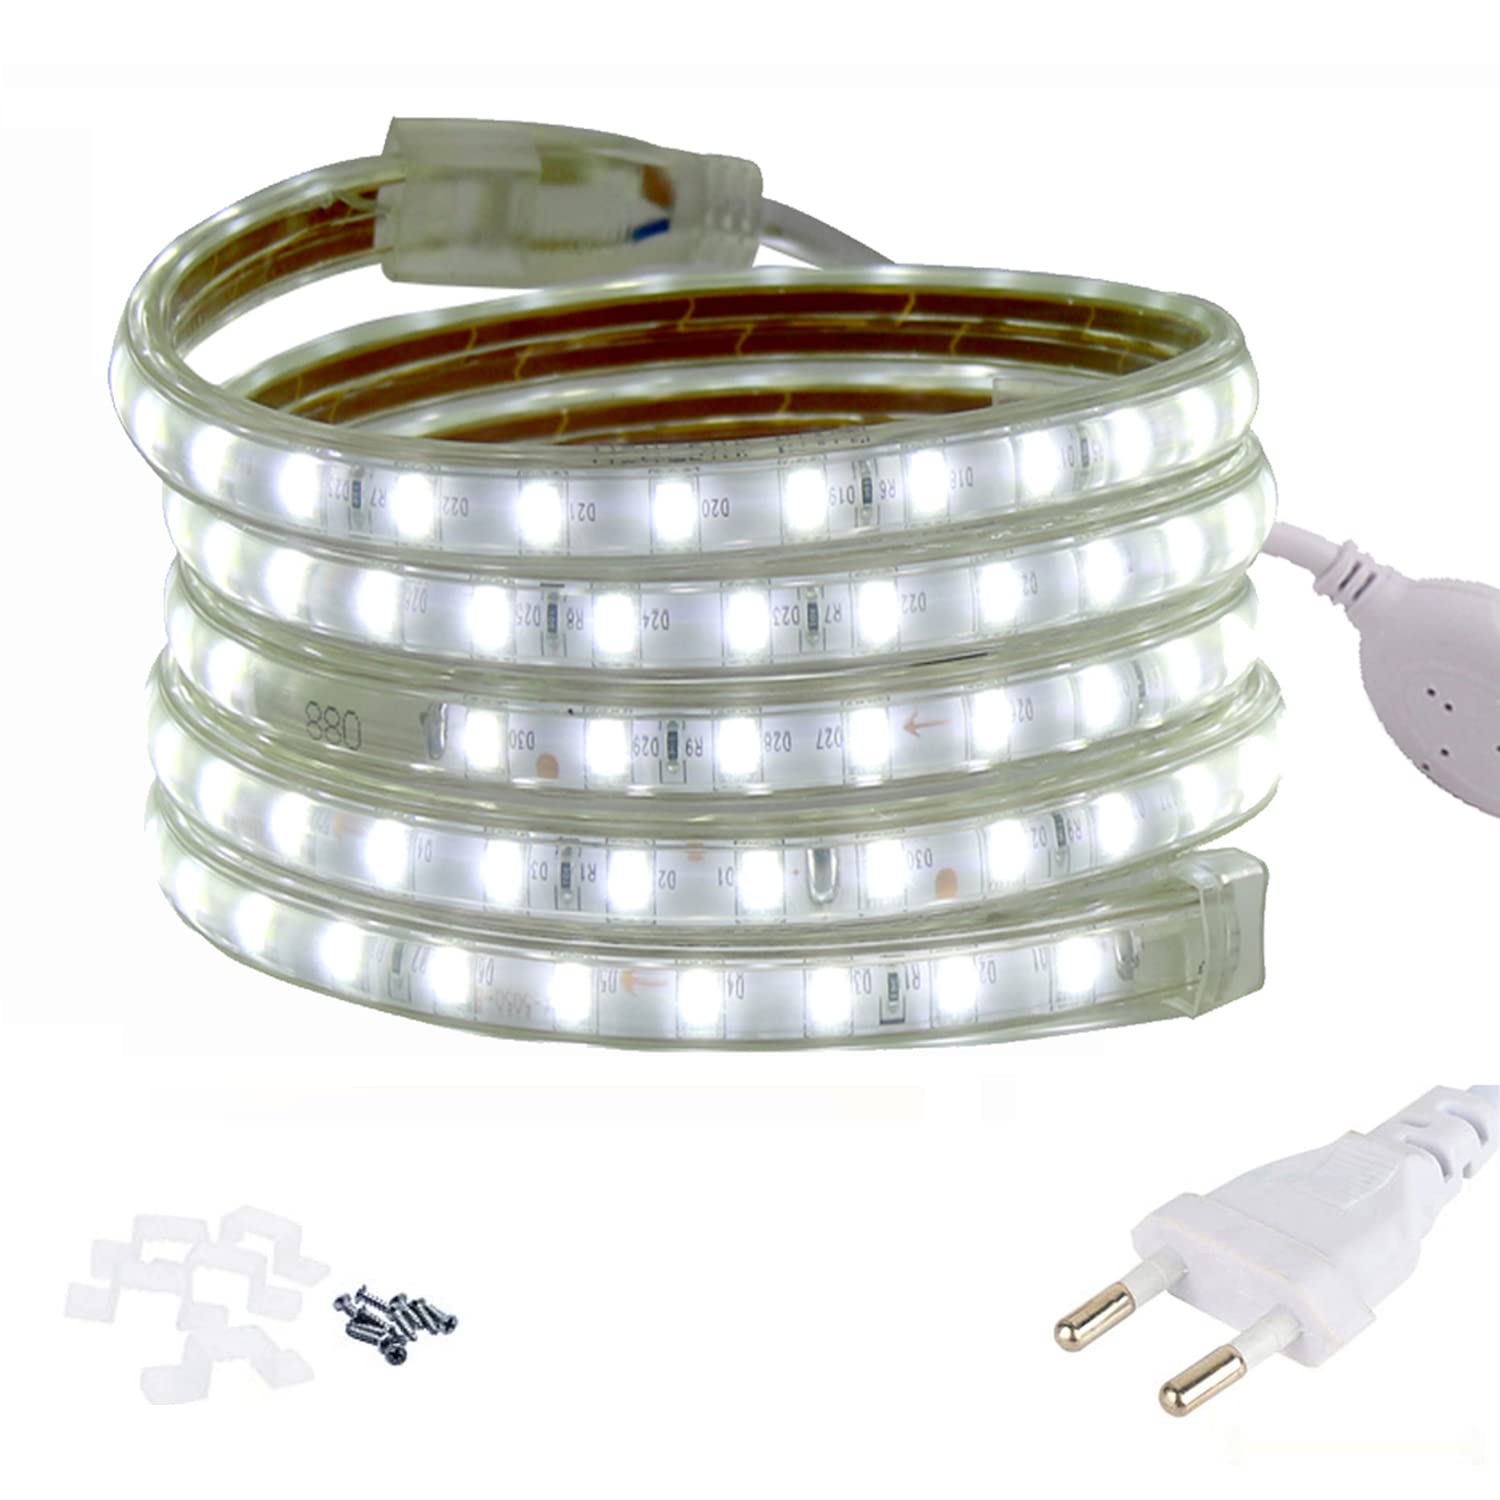 FOLGEMIR 20m Kalt Weiß LED Band, 220V 230V Lichtleiste, 5050 SMD 60 Leds/m Strip, IP65 Lichtschlauch, helle Hintergrundbeleuchtung